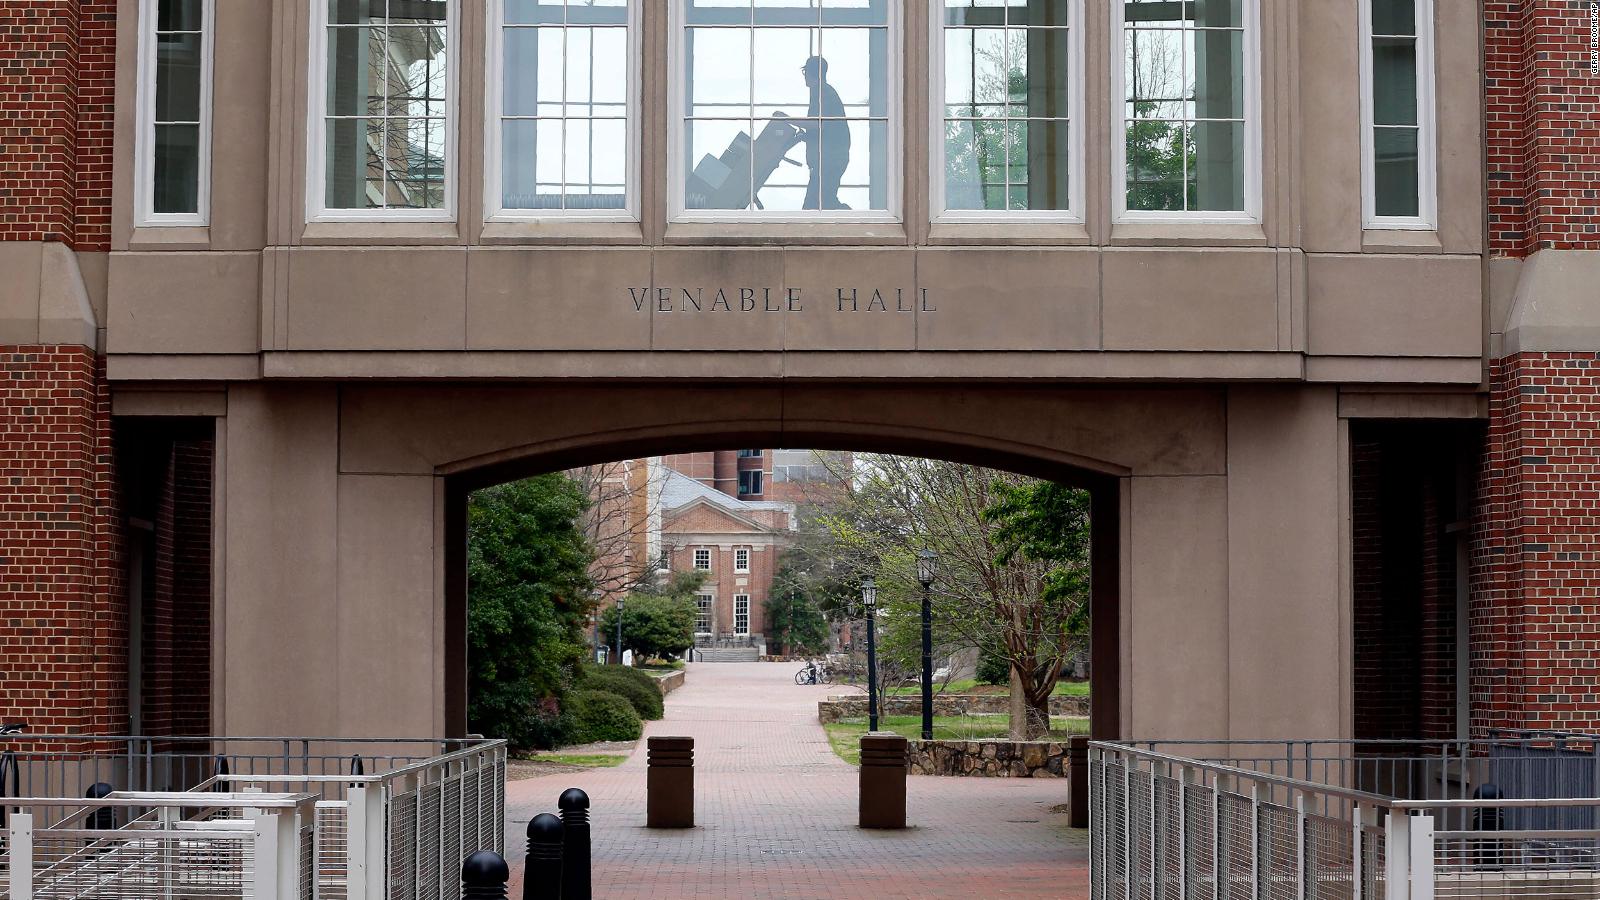 UNC-Chapel Hill's student newspaper editorial calls out university